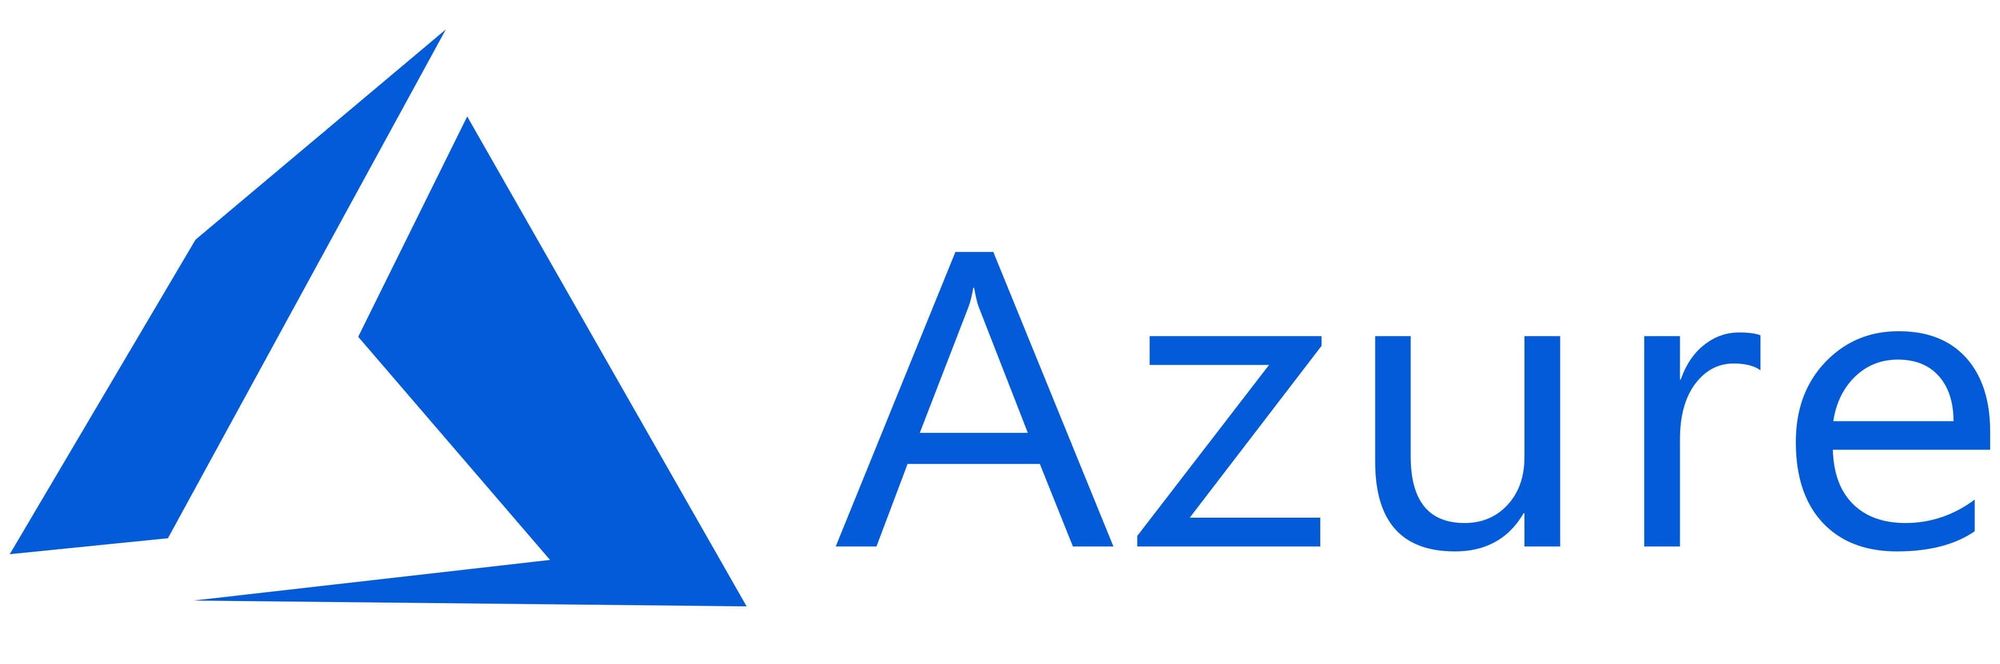 Azure Symbols Import into Draw.io - Desktop Application (Azure)